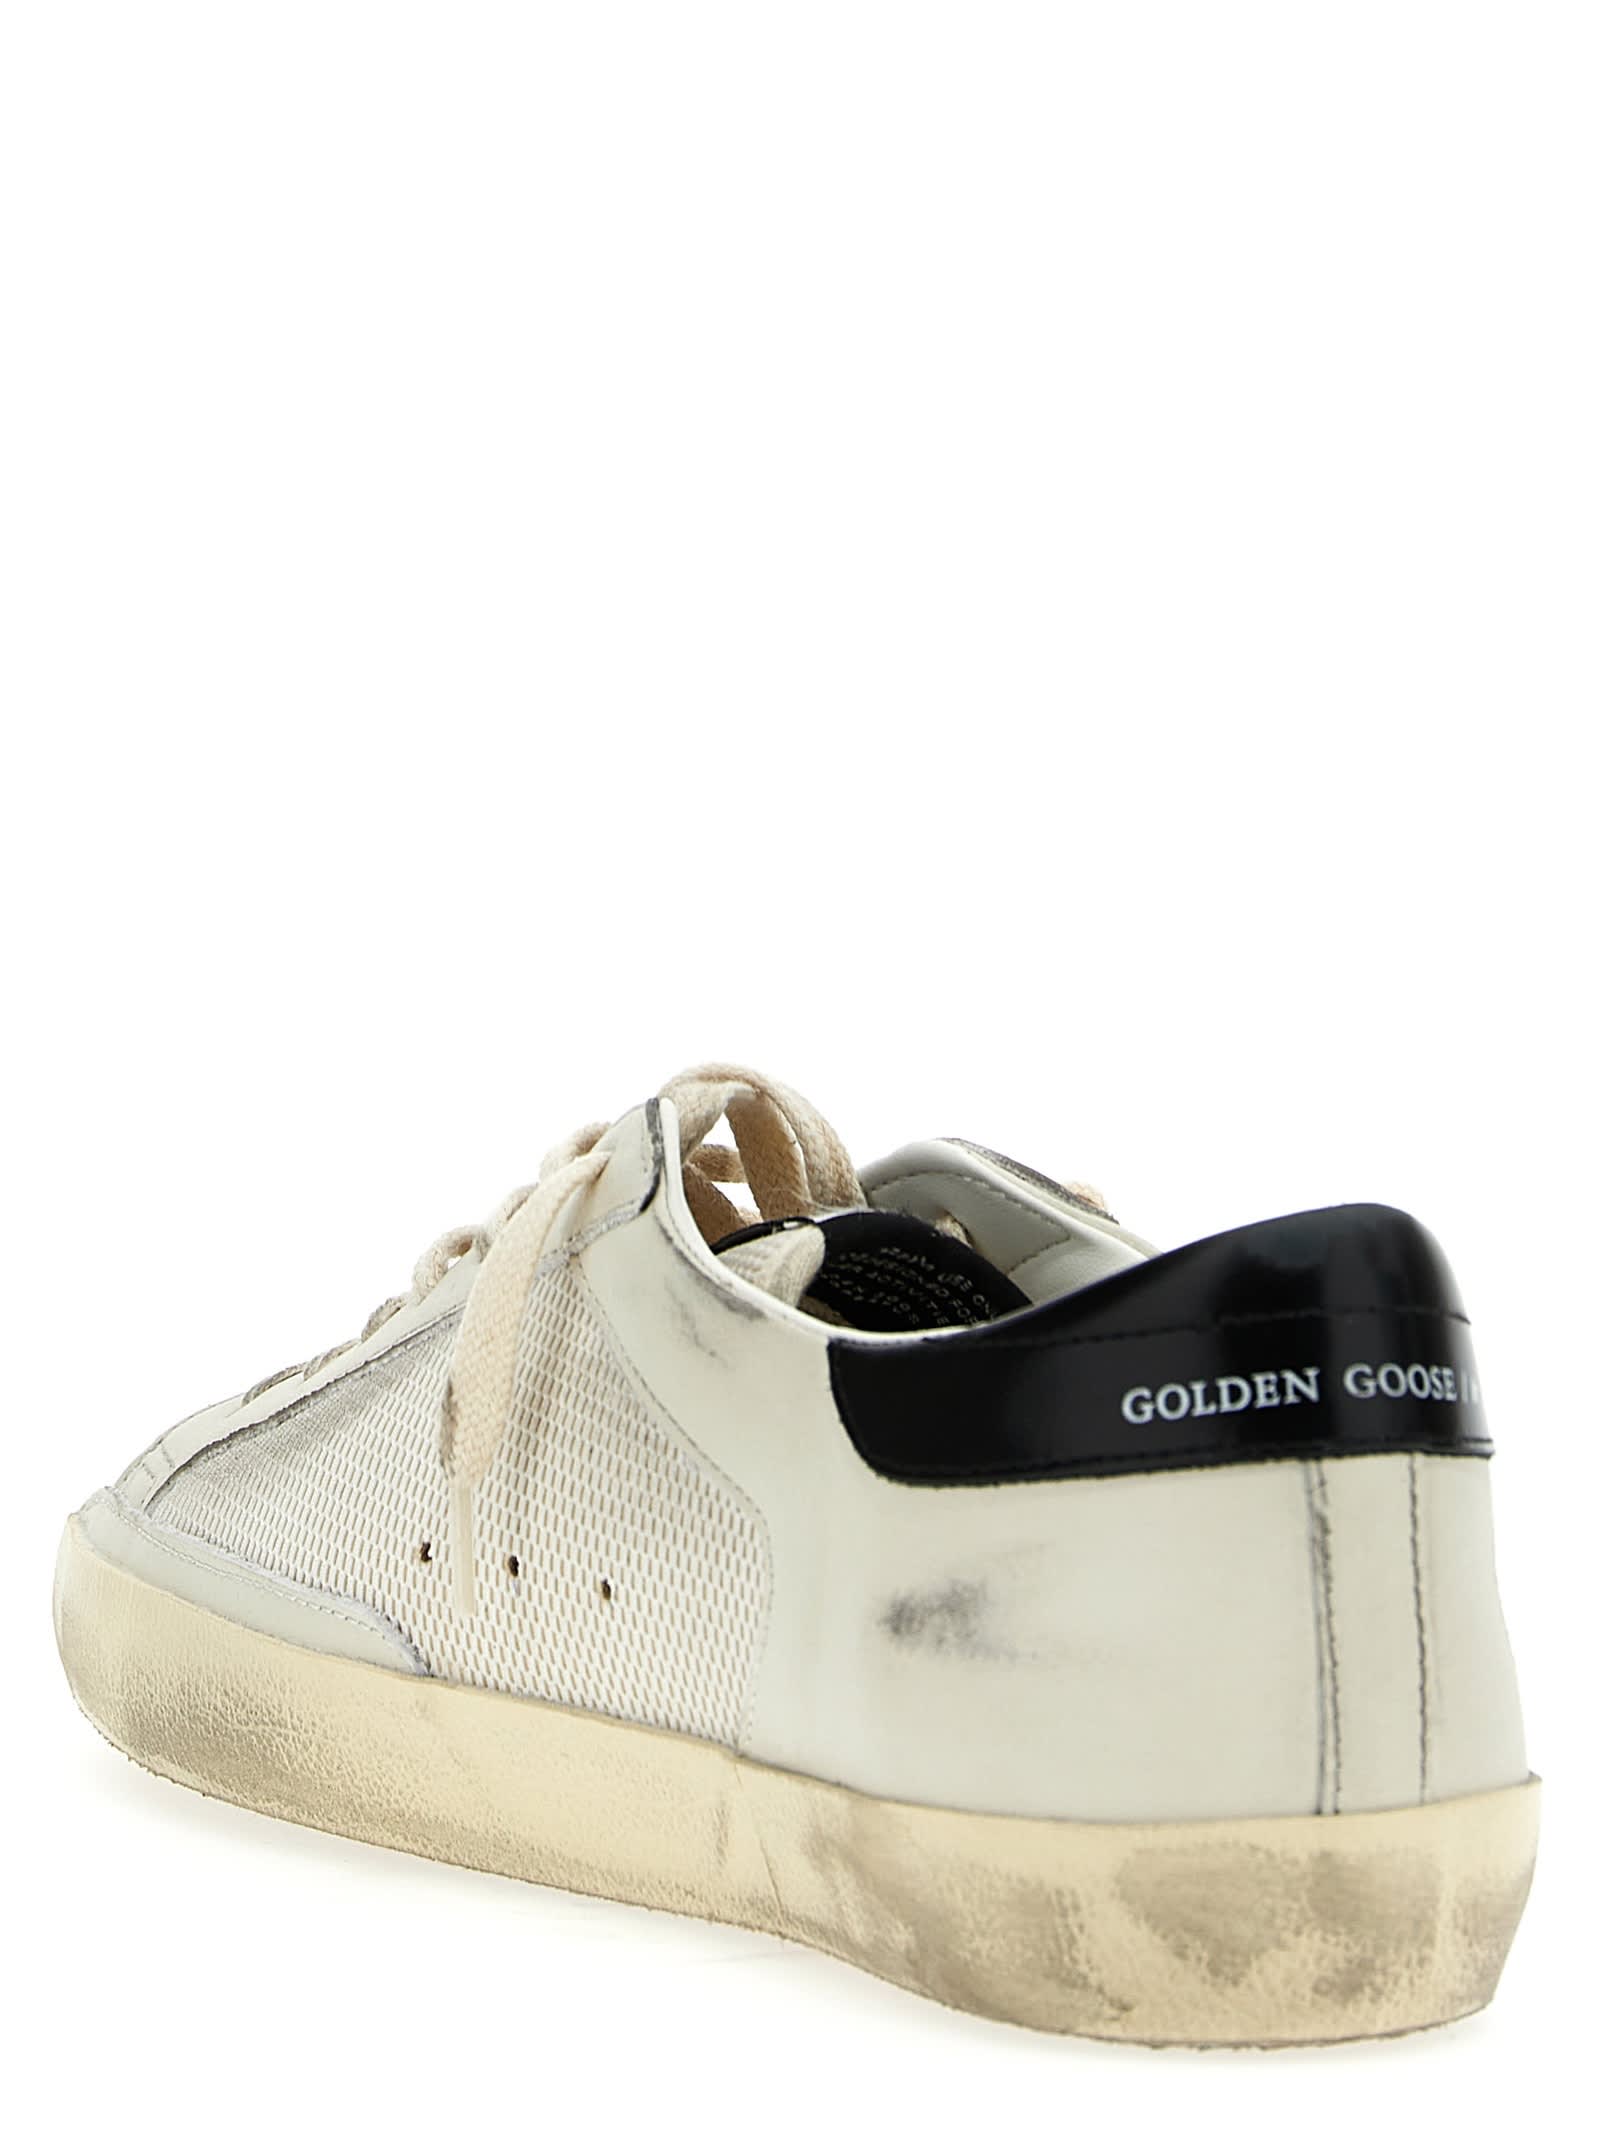 Shop Golden Goose Superstar Sneakers In White/pomegranate/black